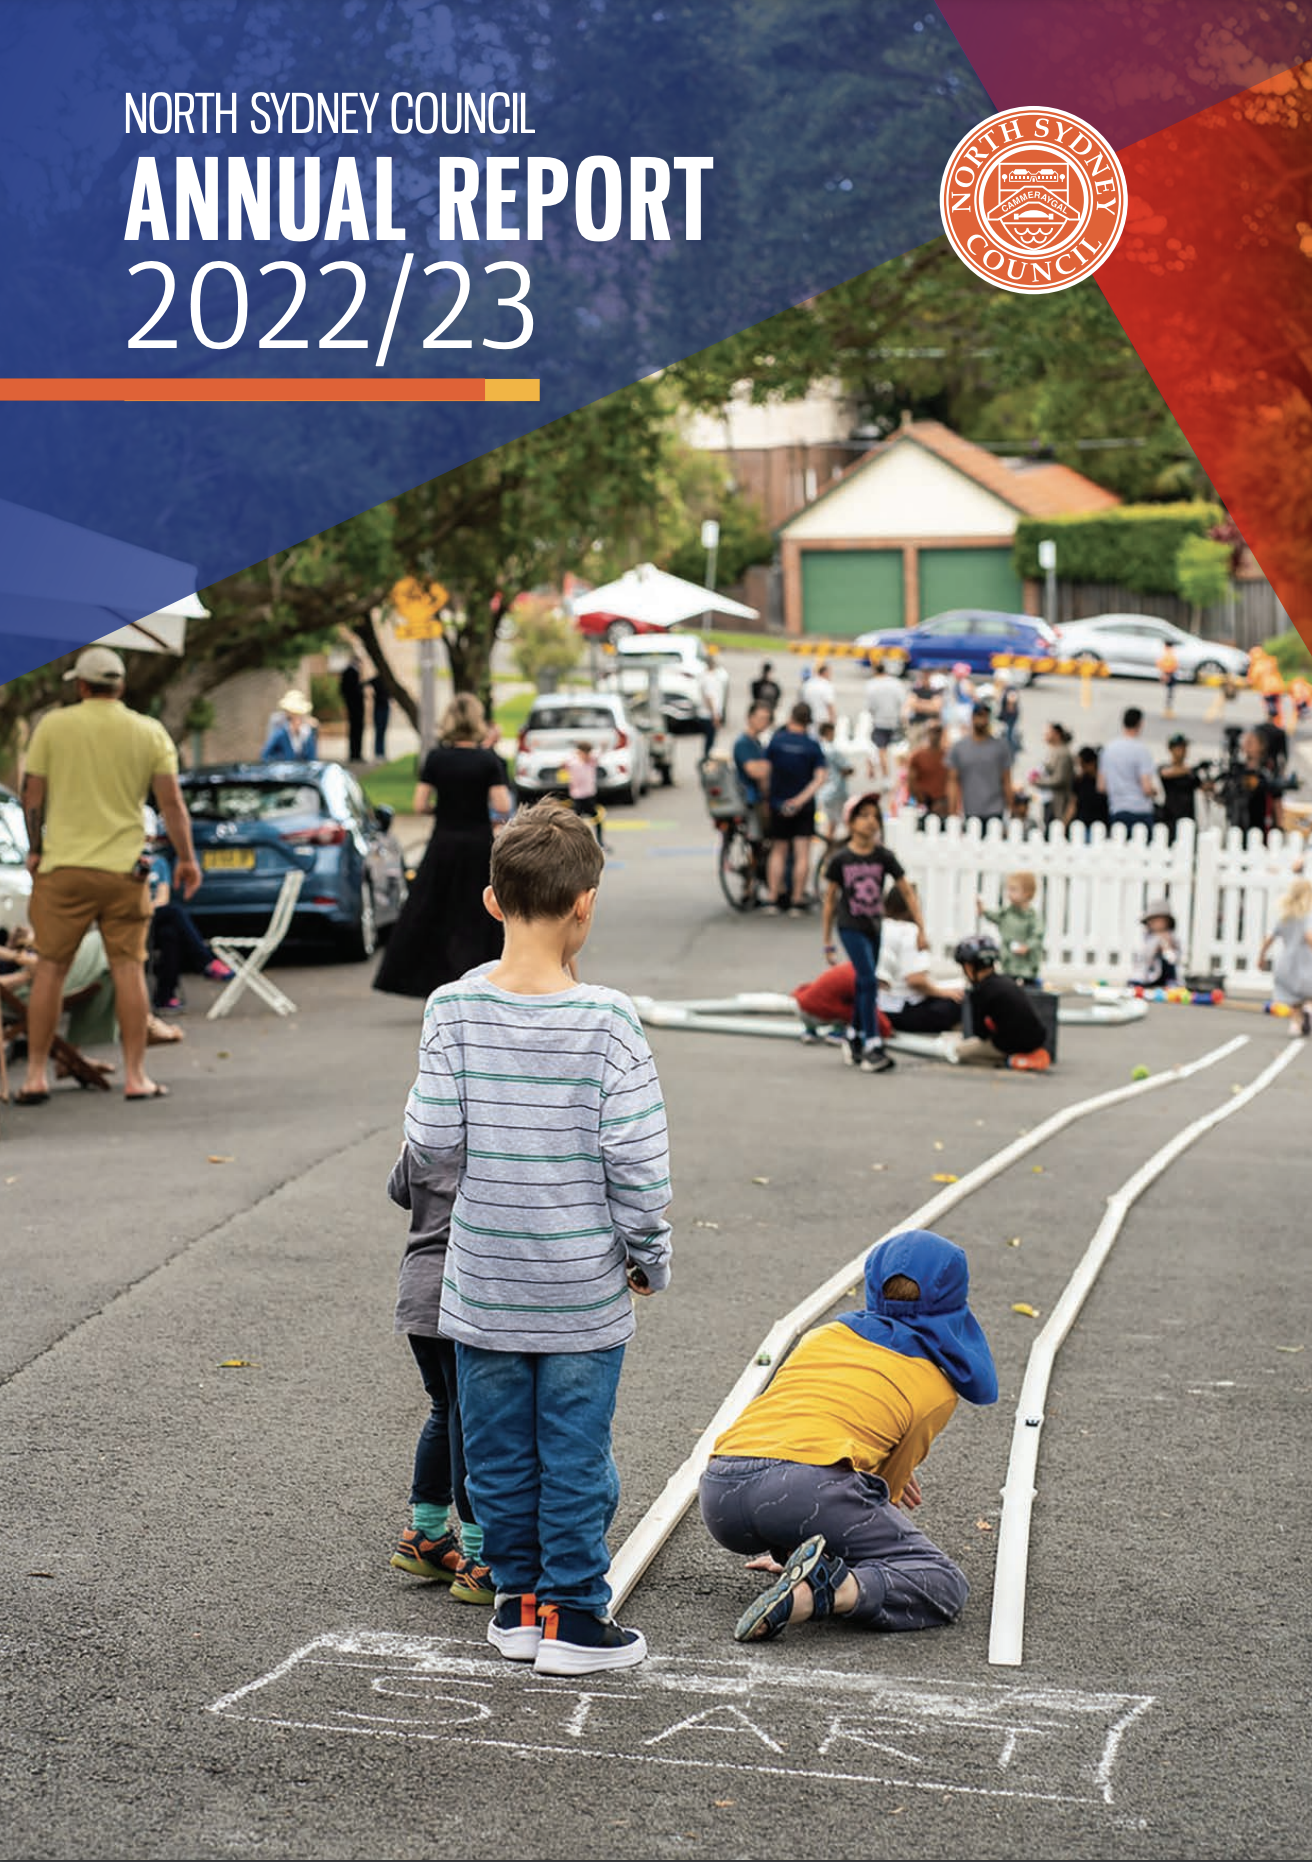 Annual Report Cover 2022/23